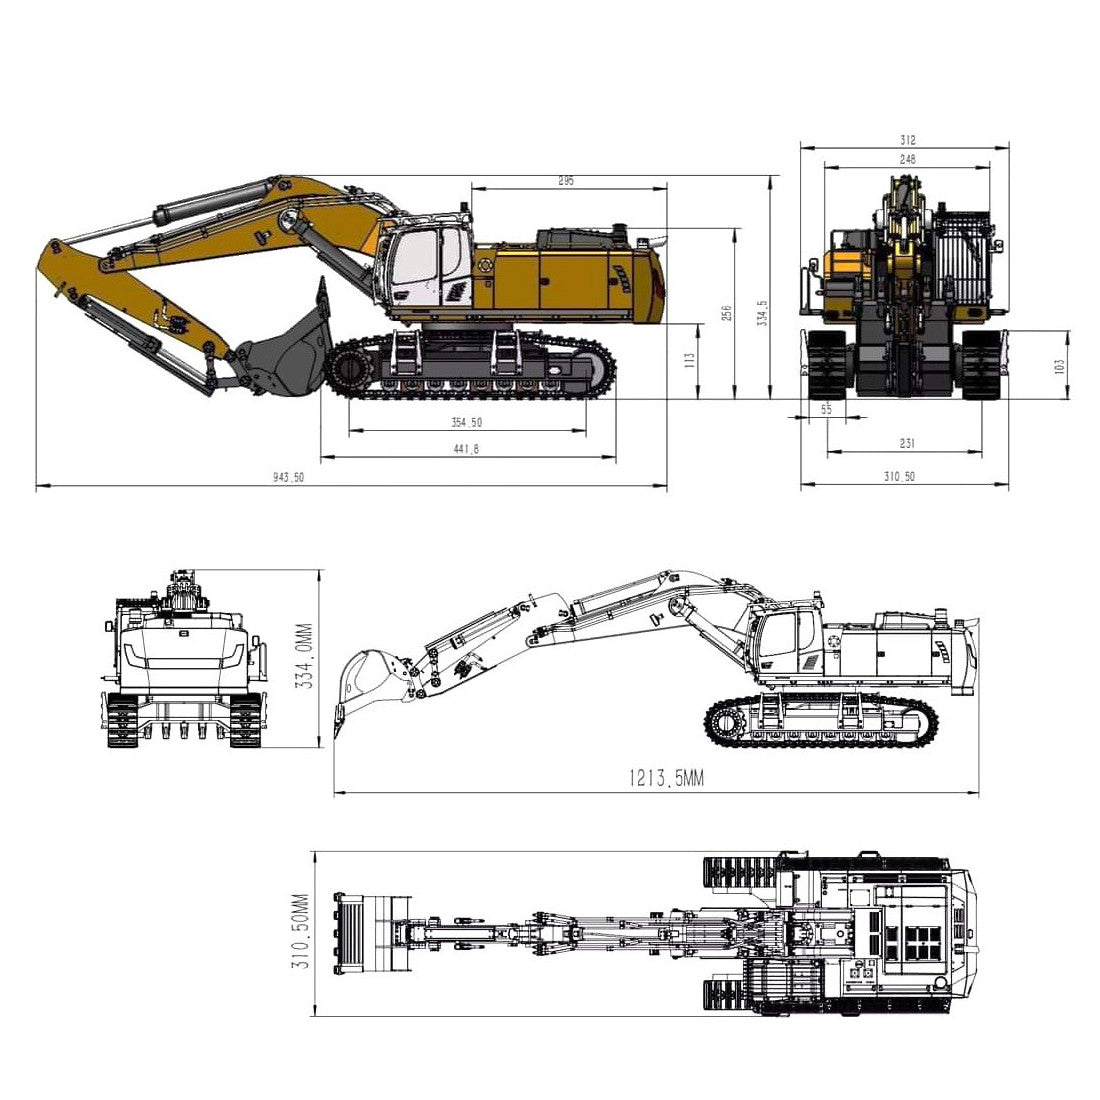 Huina Kabolite K970 Full Alloy Excavator Simulation Hydraulic Excavator RC Car High Quality Toy Gift